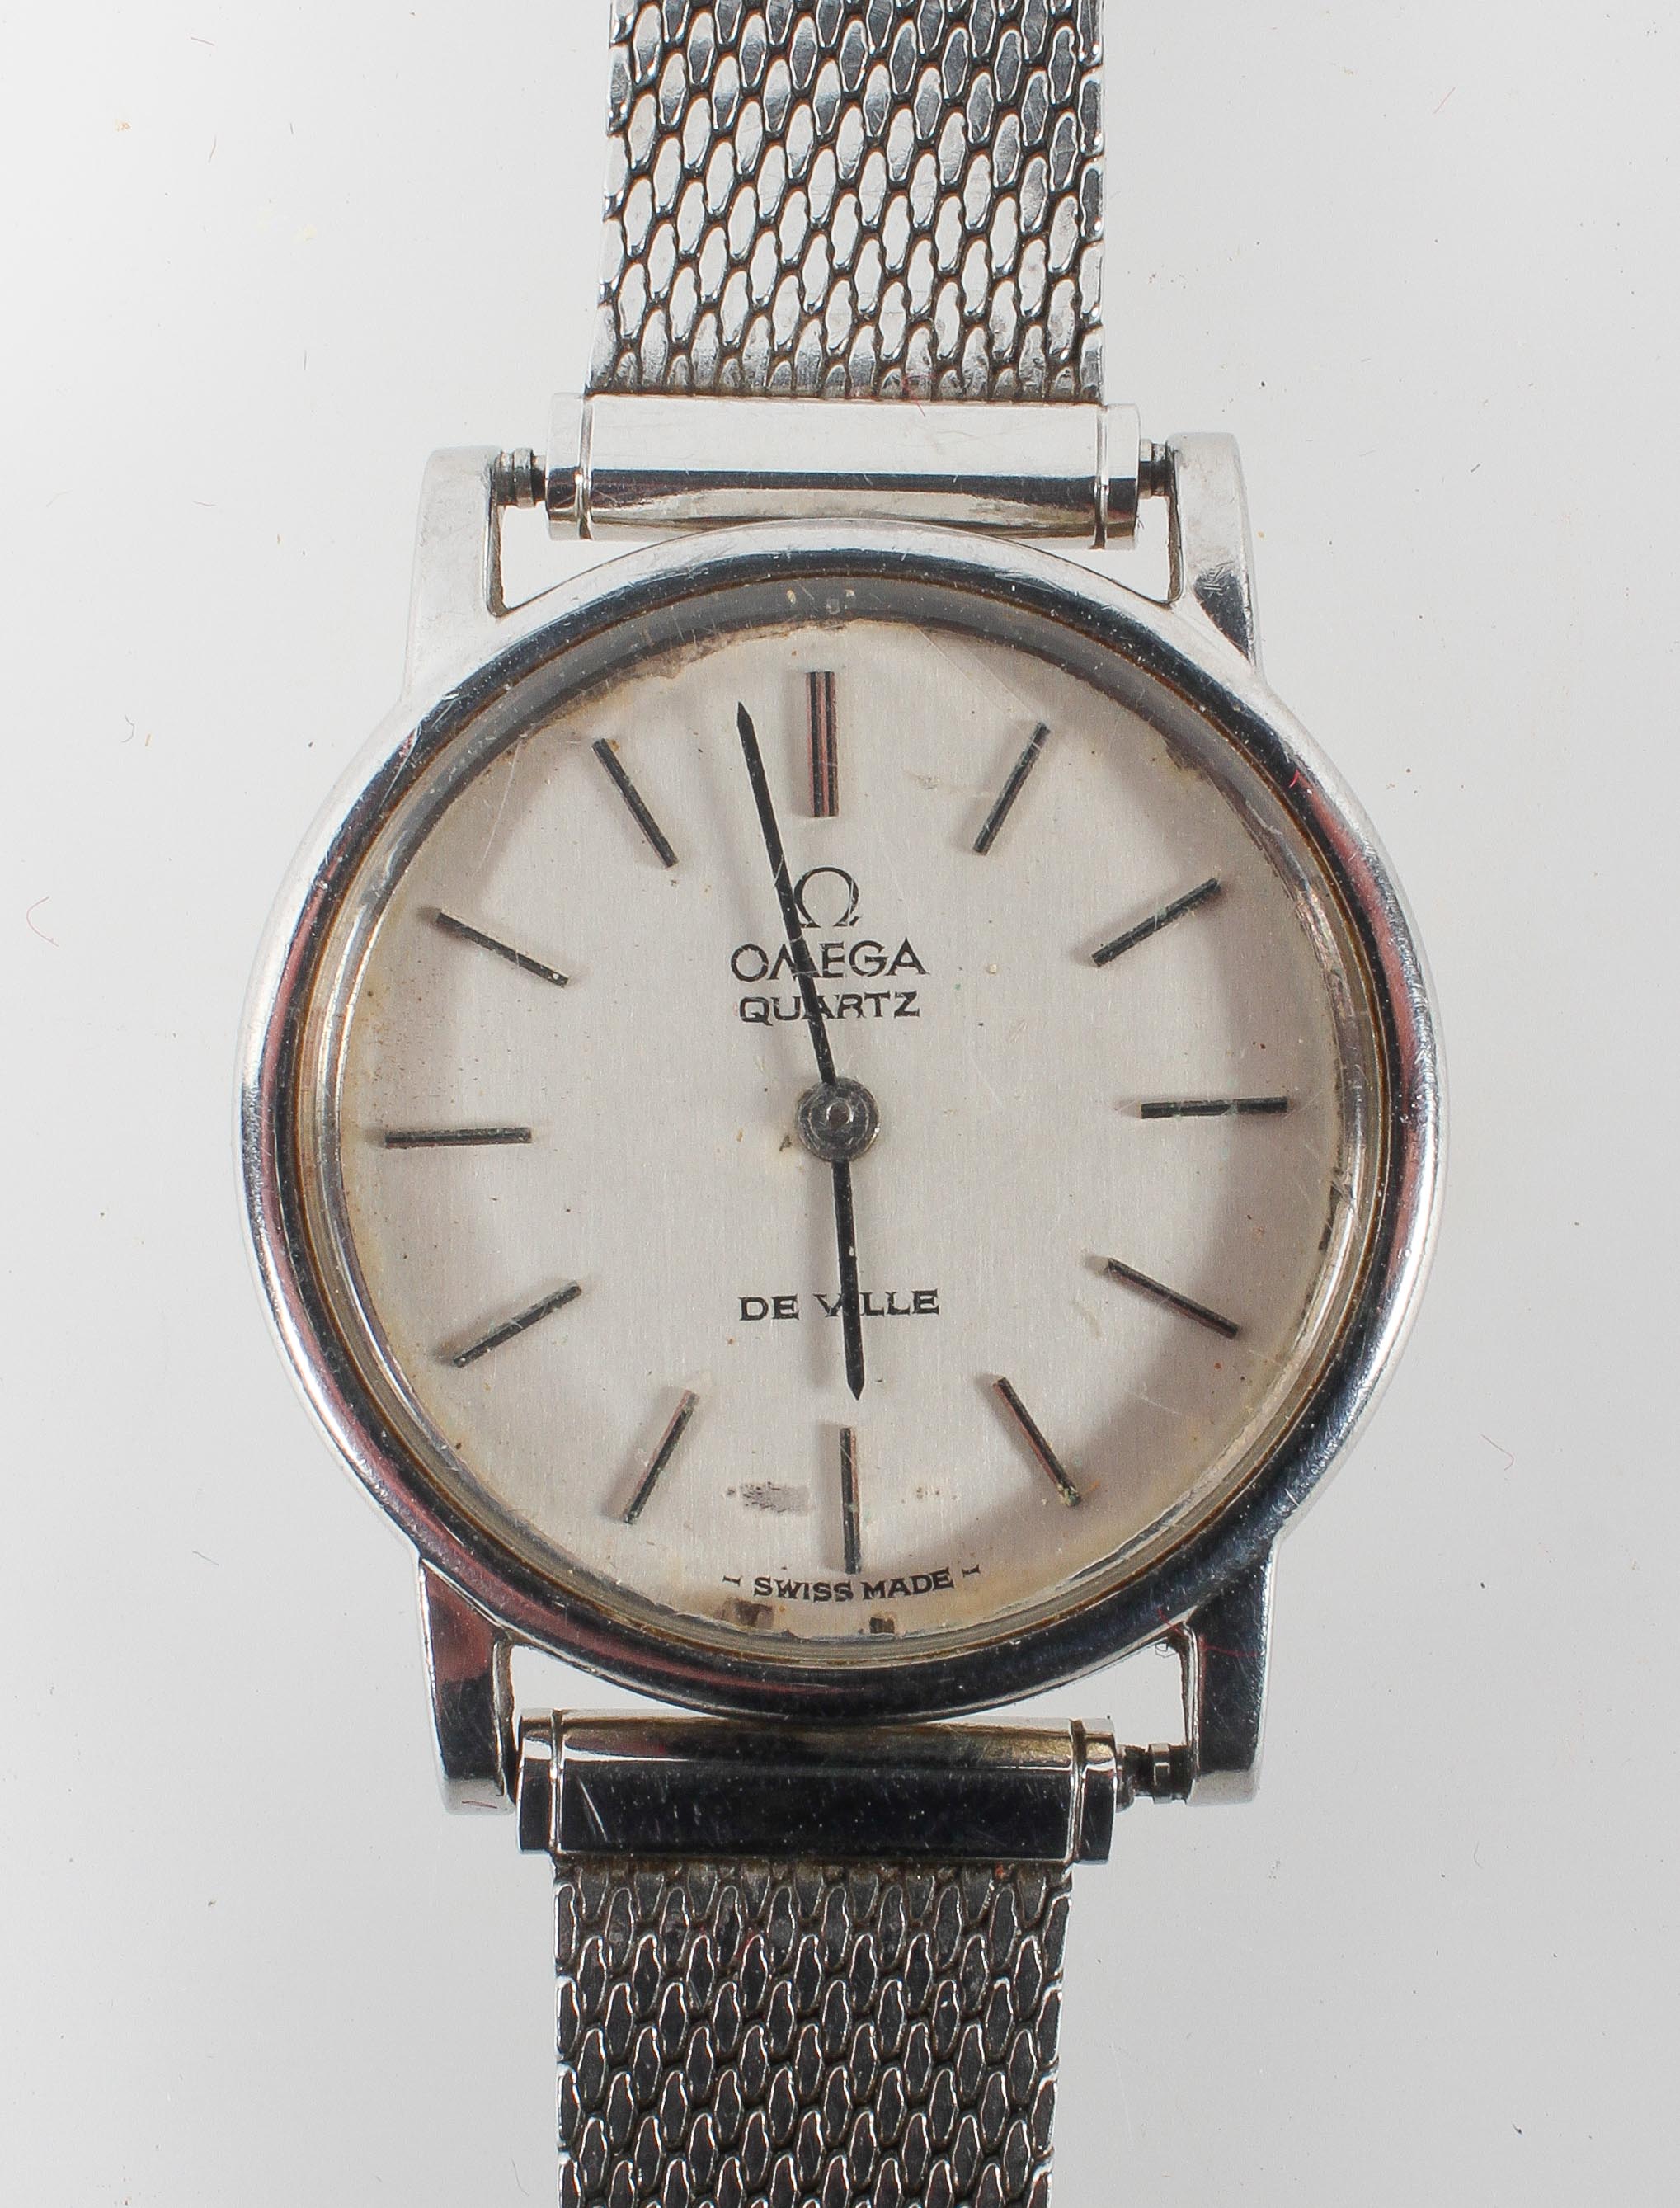 A stainless steel Omega deville wristwatch. Quartz movement.